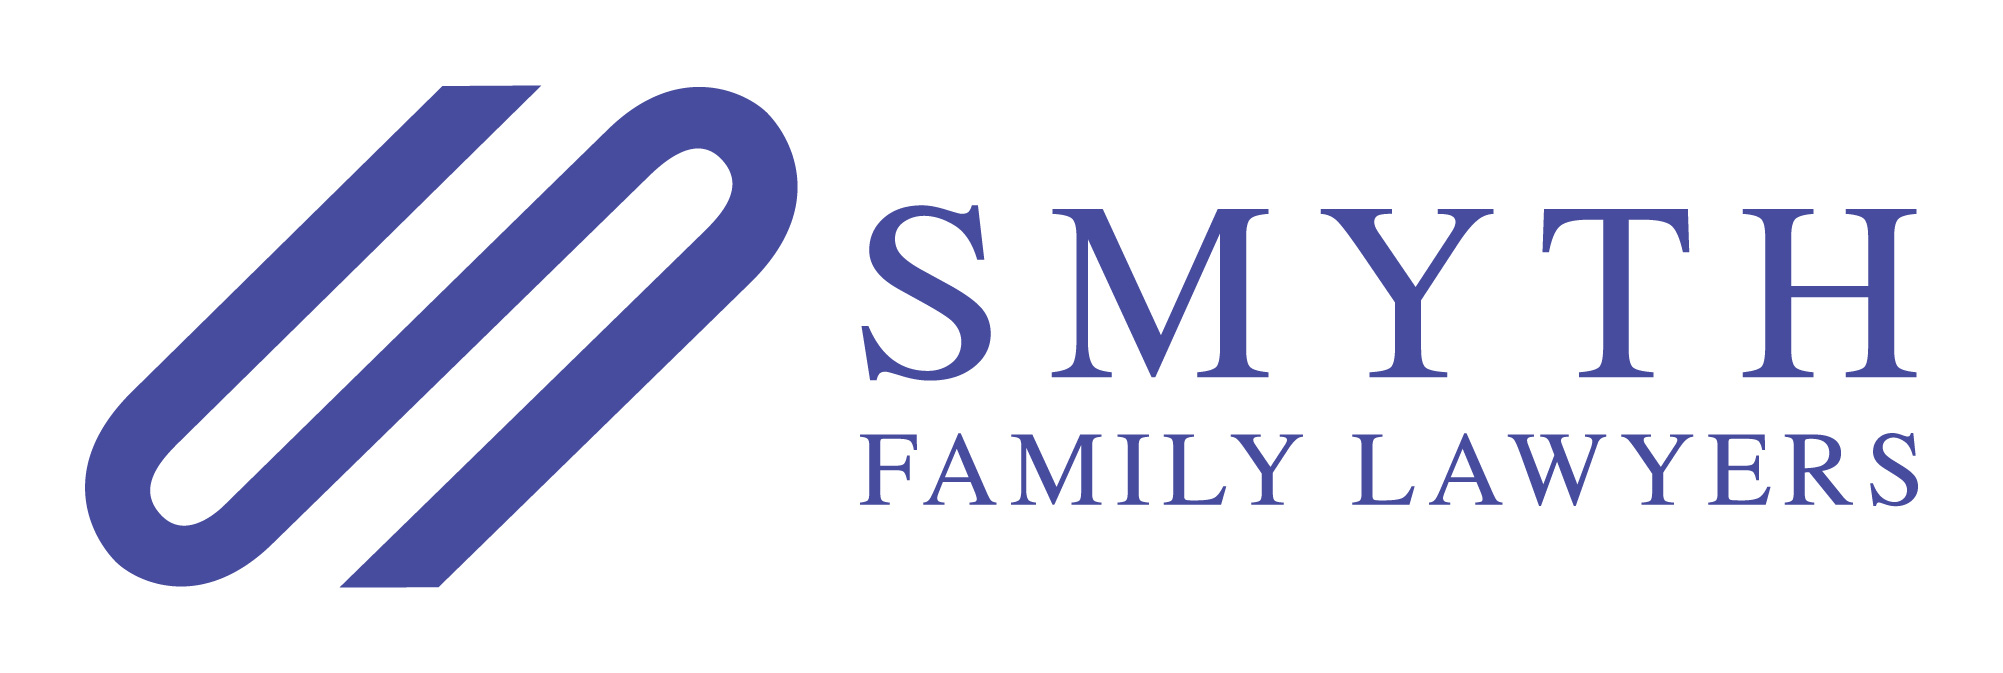 Smyth Family Lawyers logo